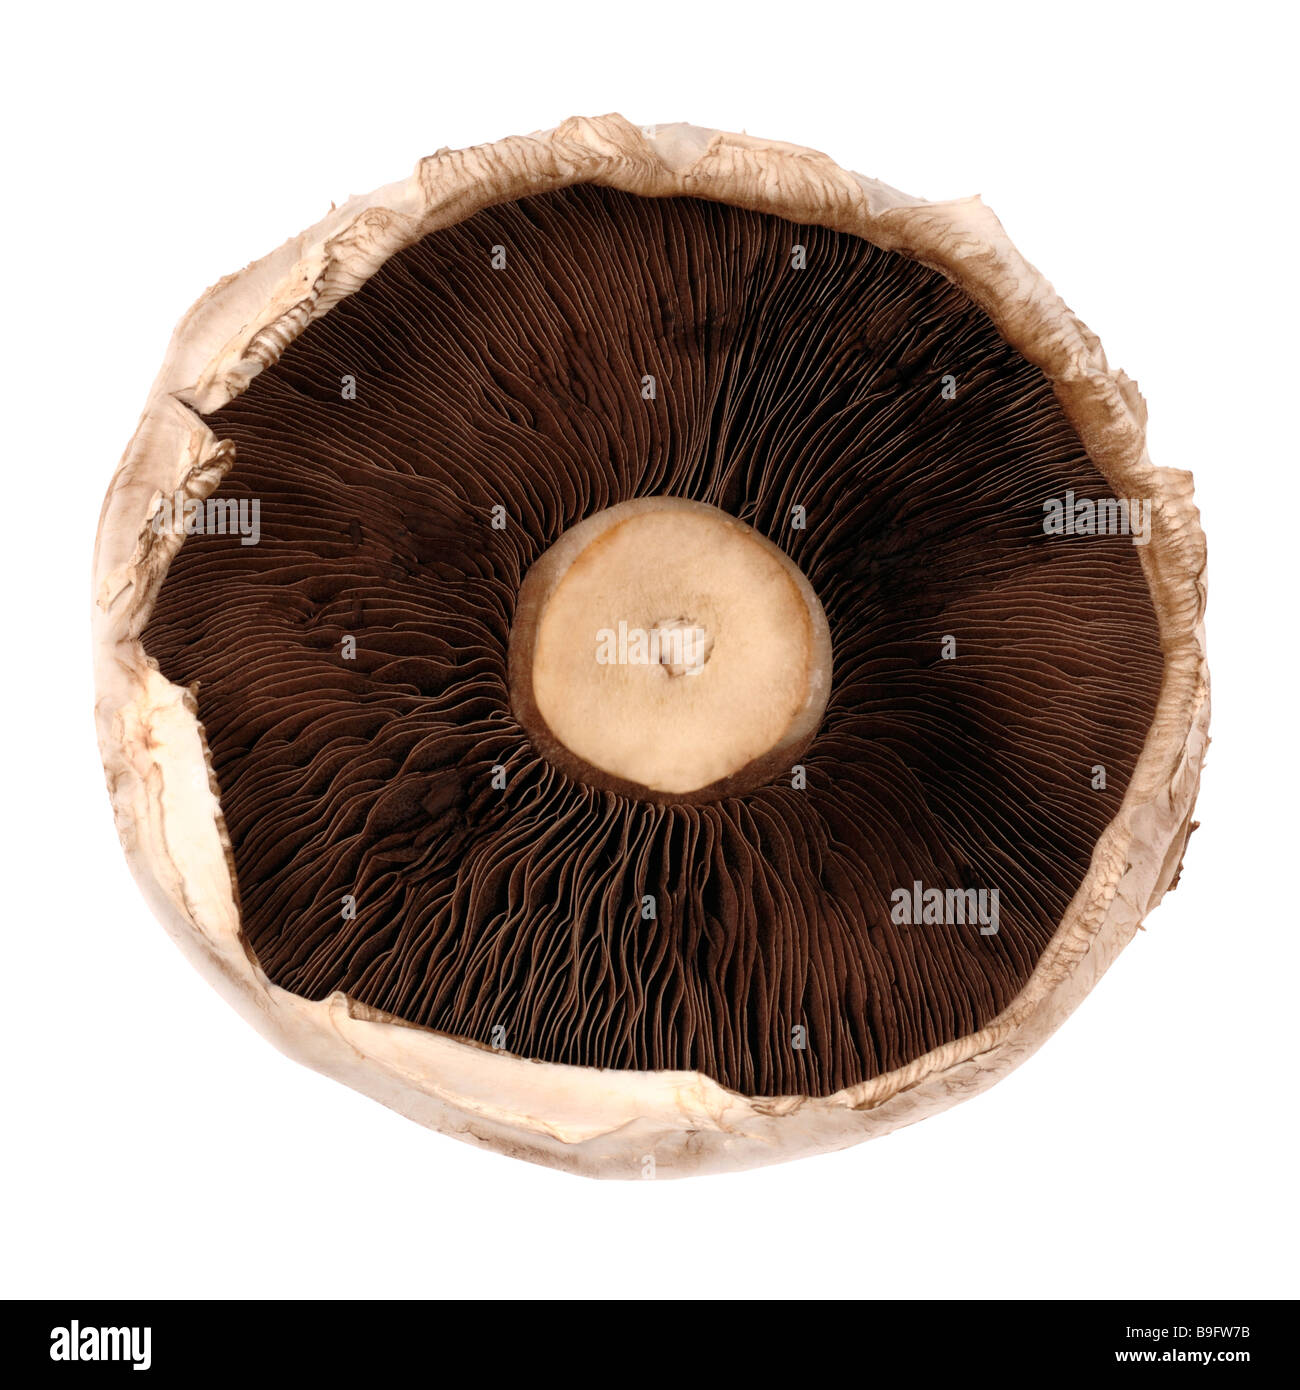 Breakfast mushroom Stock Photo